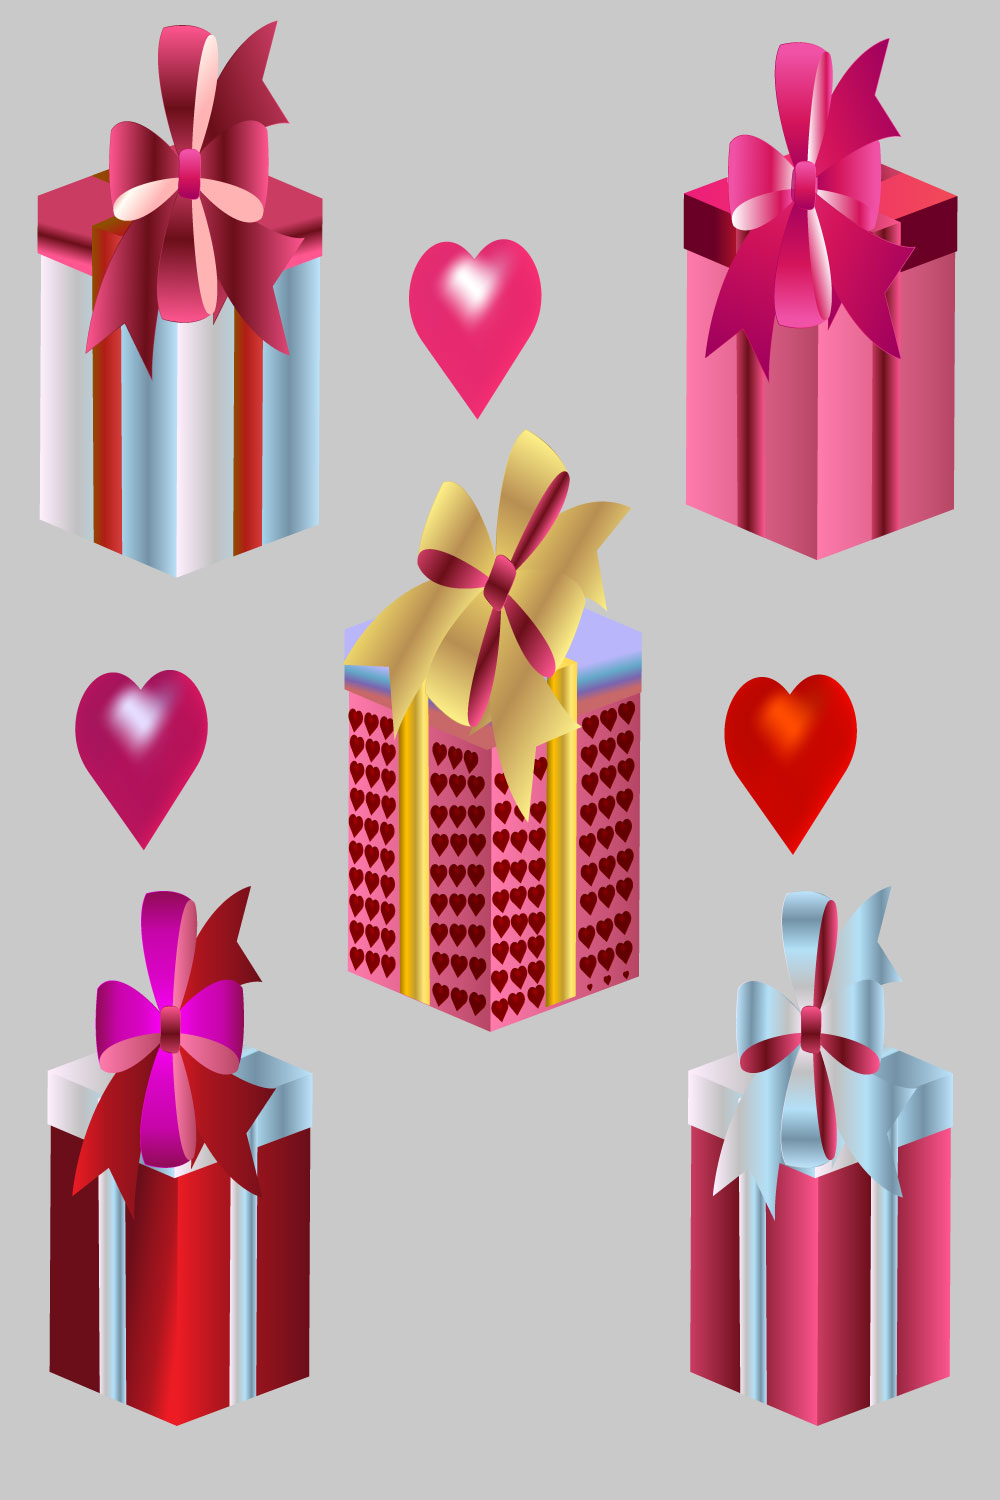 Valentine gift box & love heart illustration pinterest preview image.